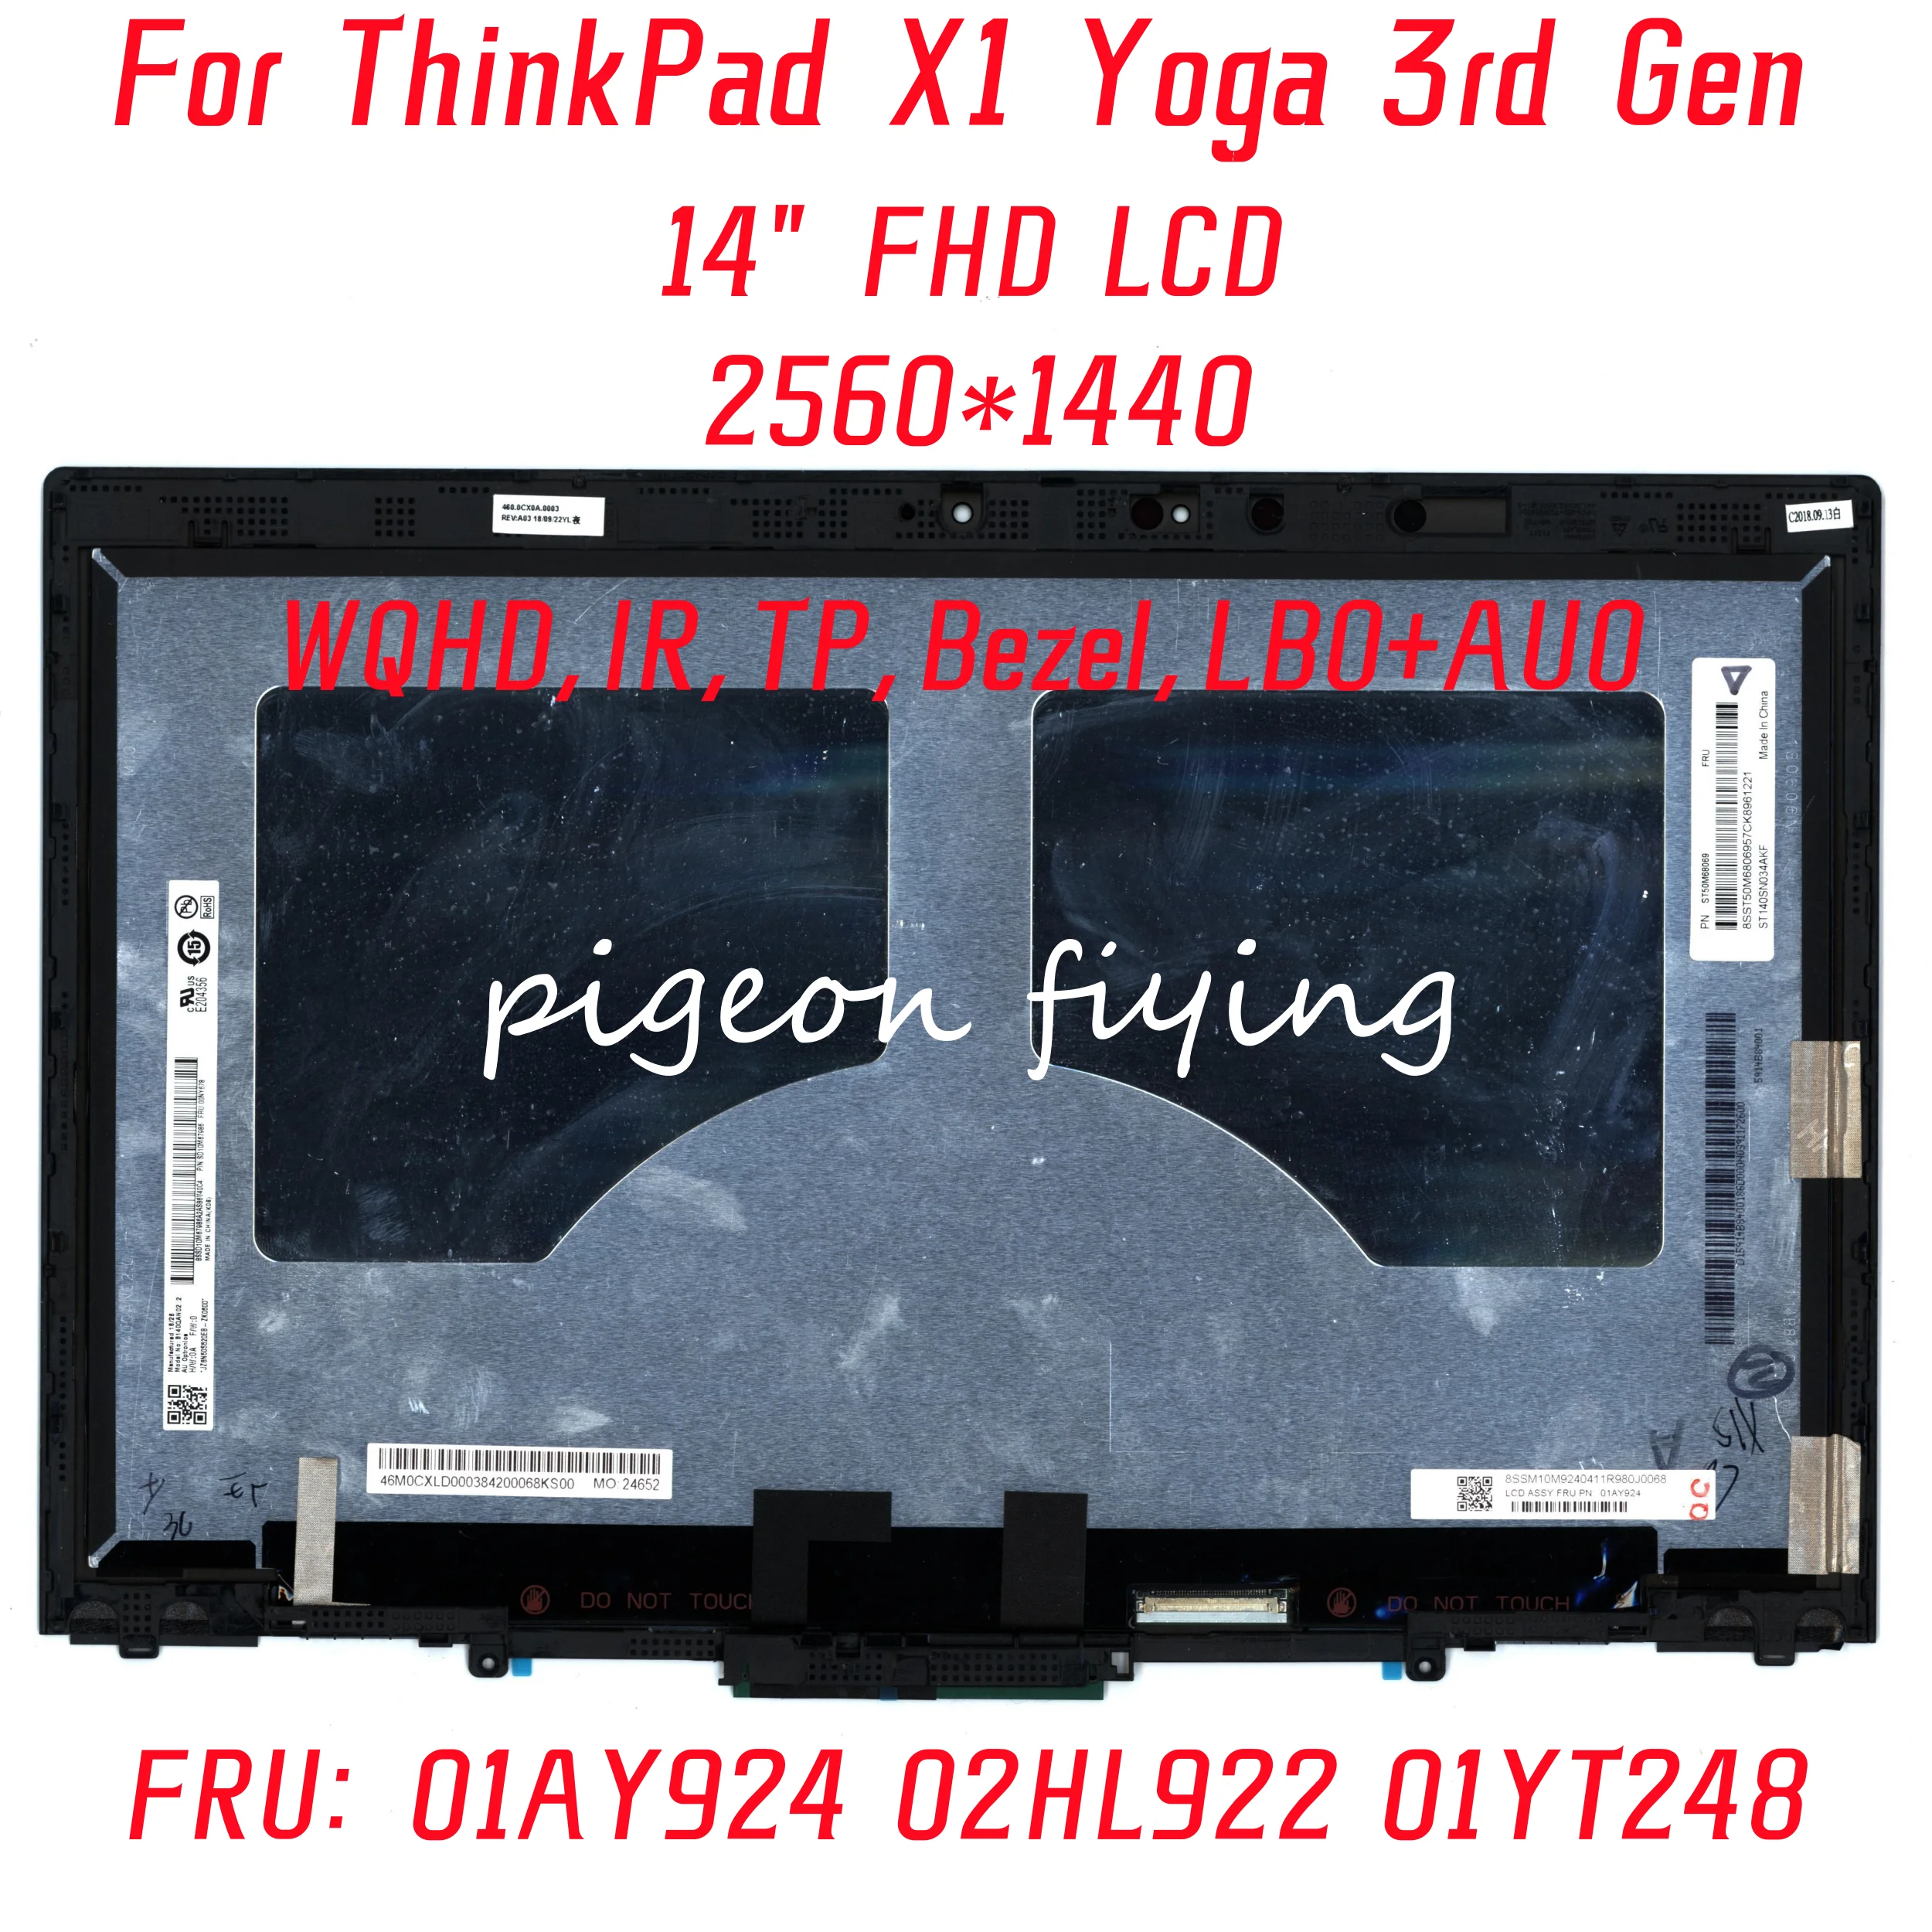 

For Lenovo Thinkpad X1 Yoga 3rd Gen laptop WQHD Screen 2560*1440 UHD IPS 14.0" FHD LCD FRU: 01AY924 02HL922 01YT248